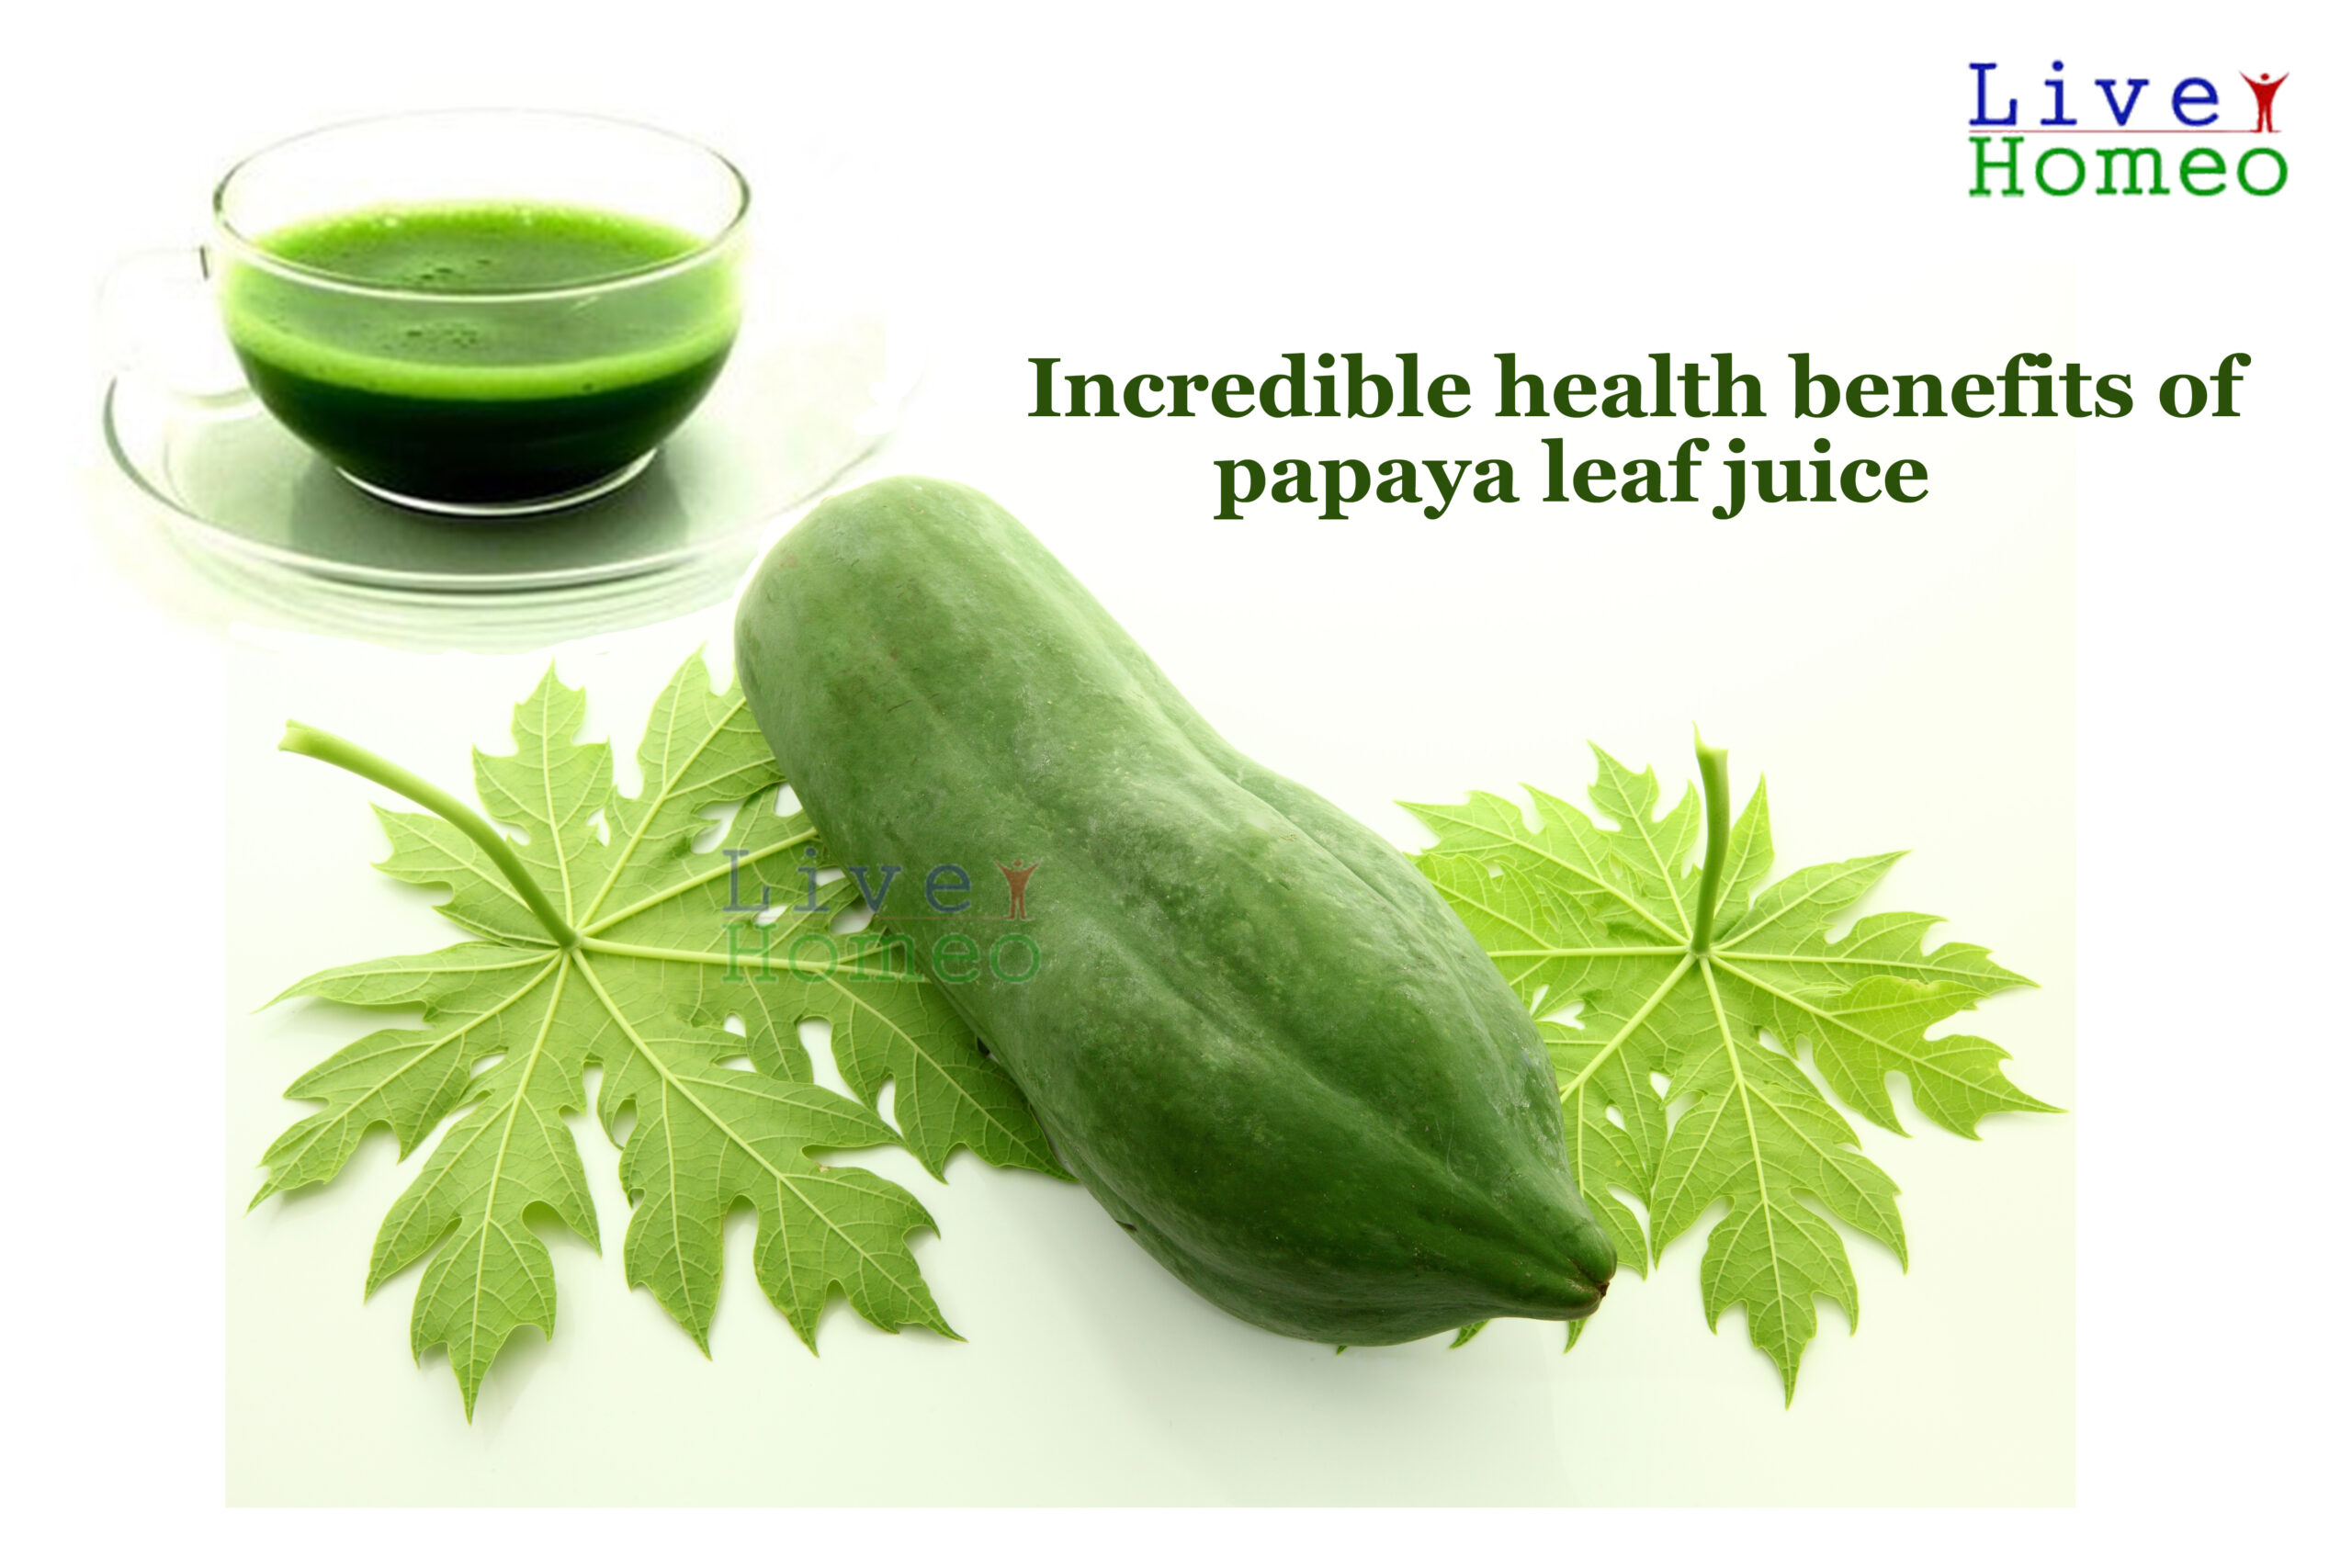 Health Benefits of papaya leaf juice